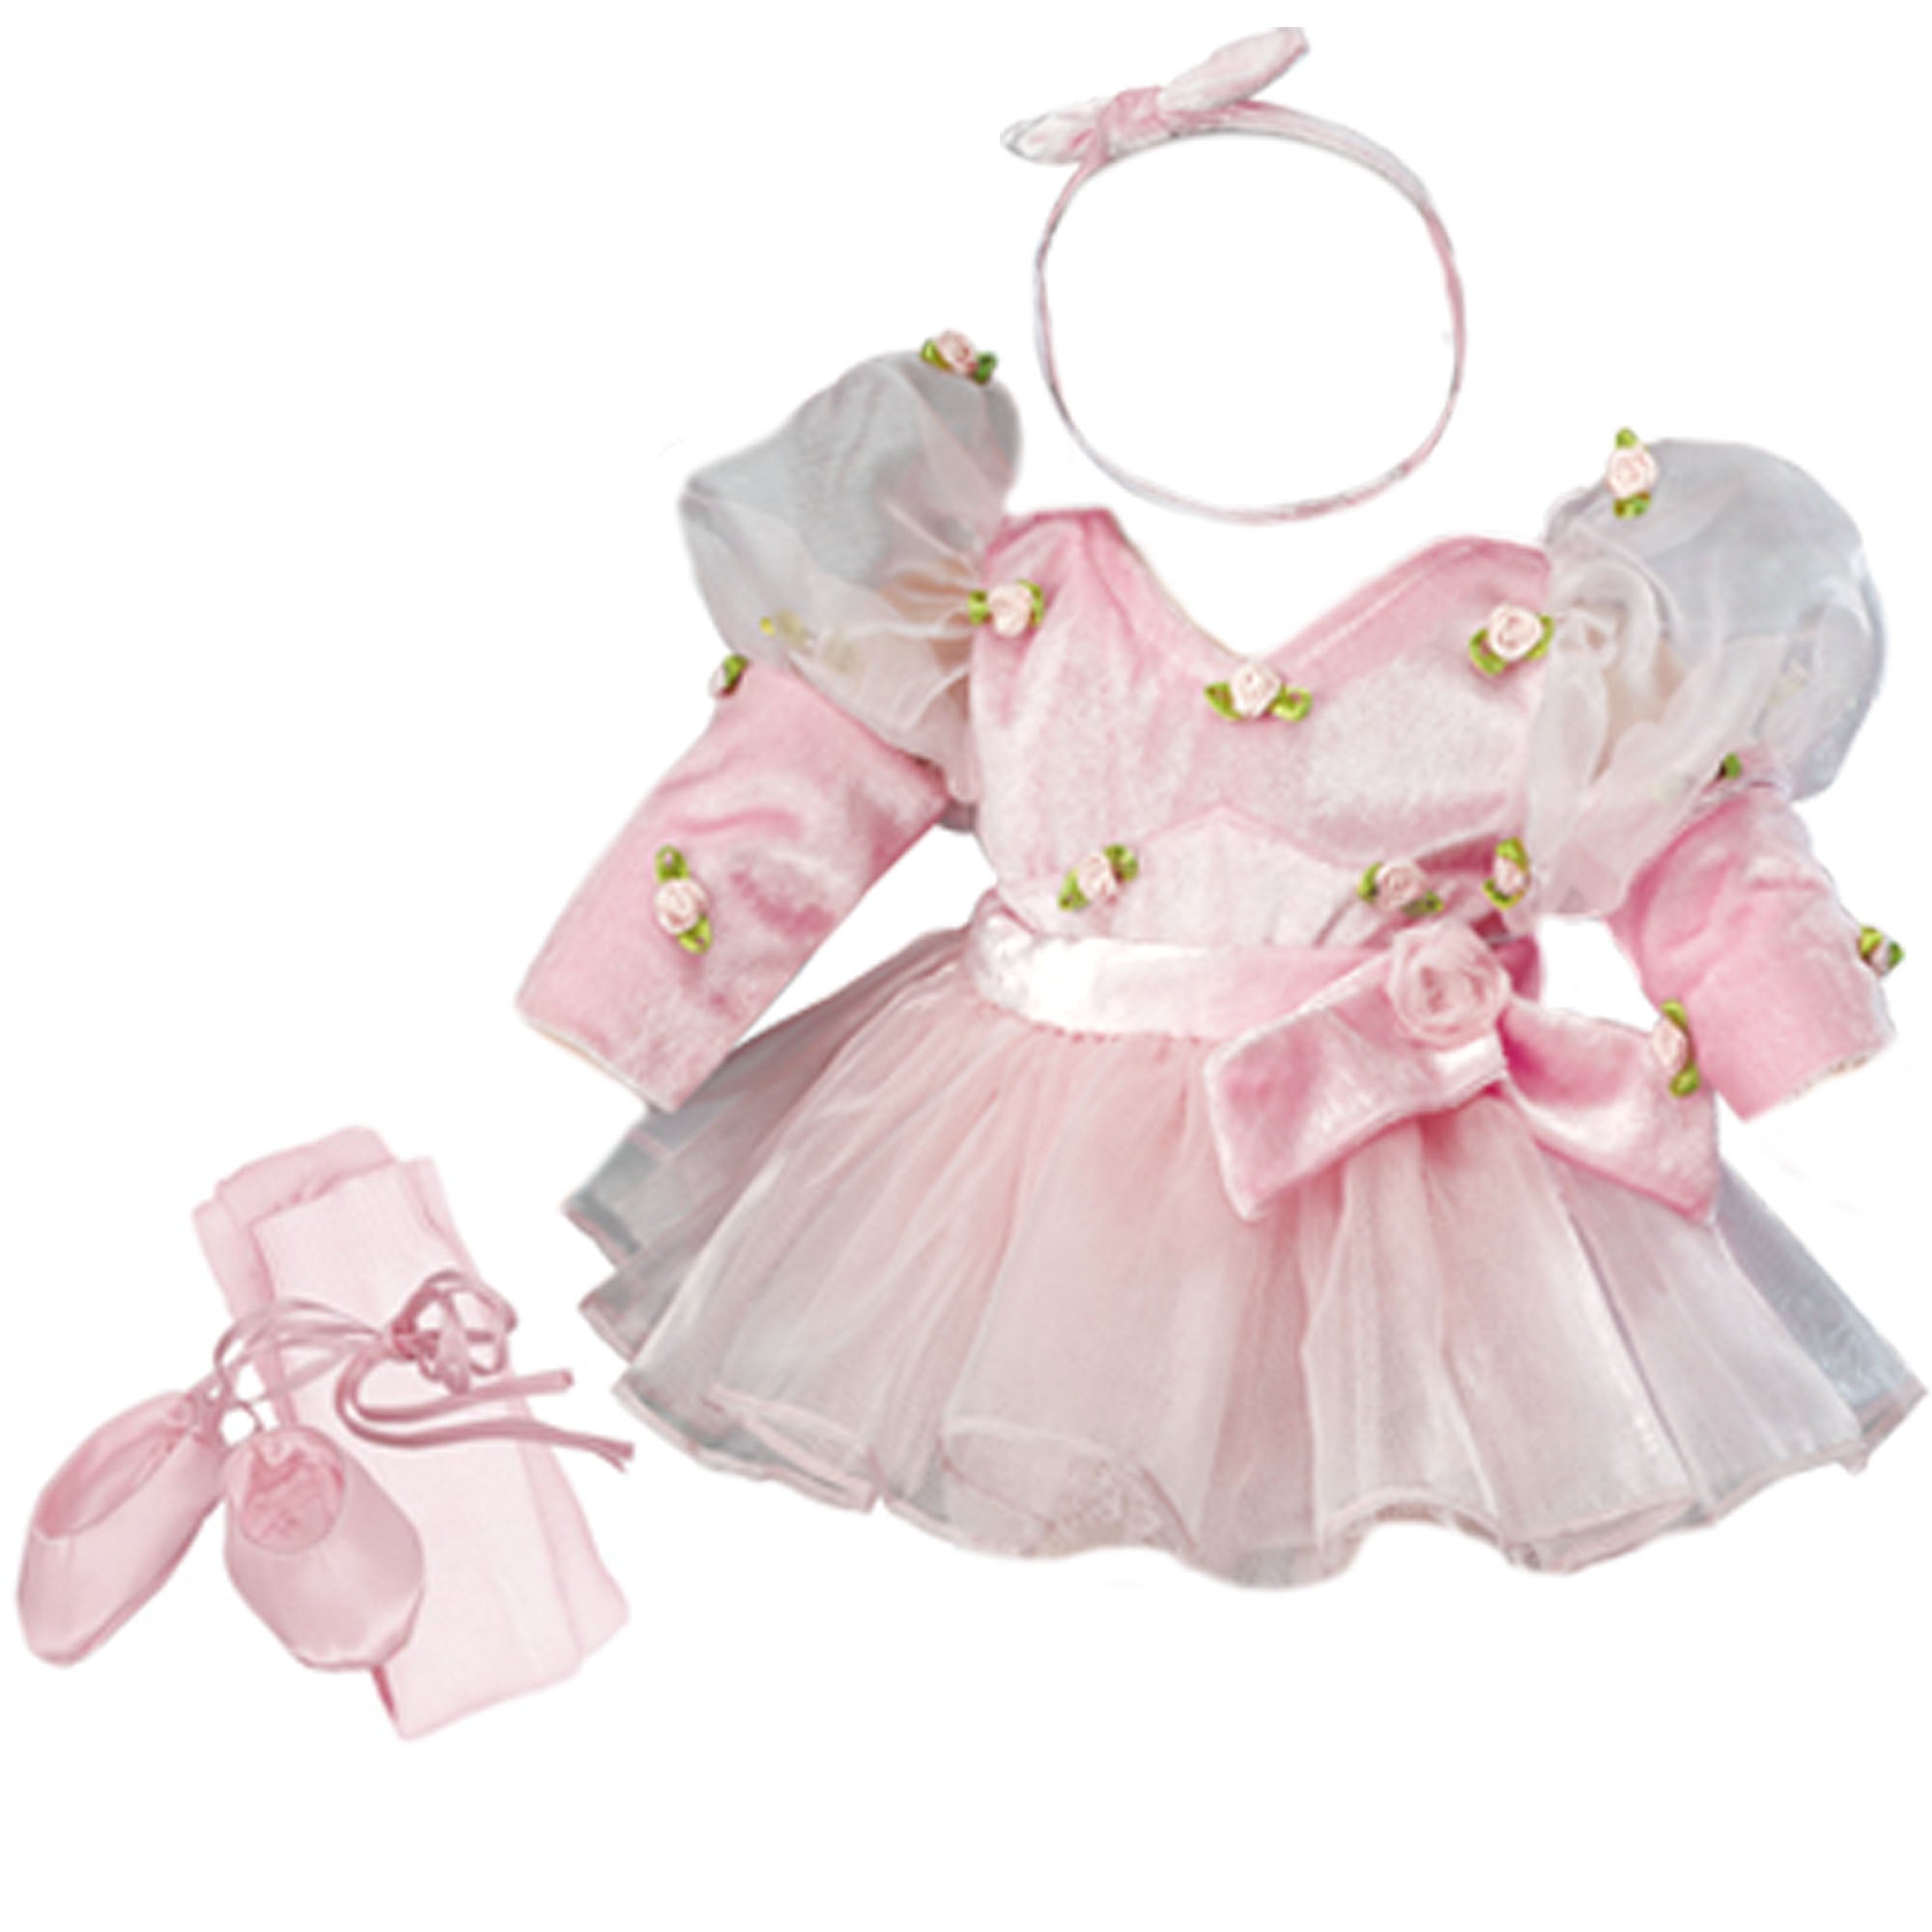 Sophia's 5 Piece Ballet Recital Costume Set for 18'' Dolls, Pink